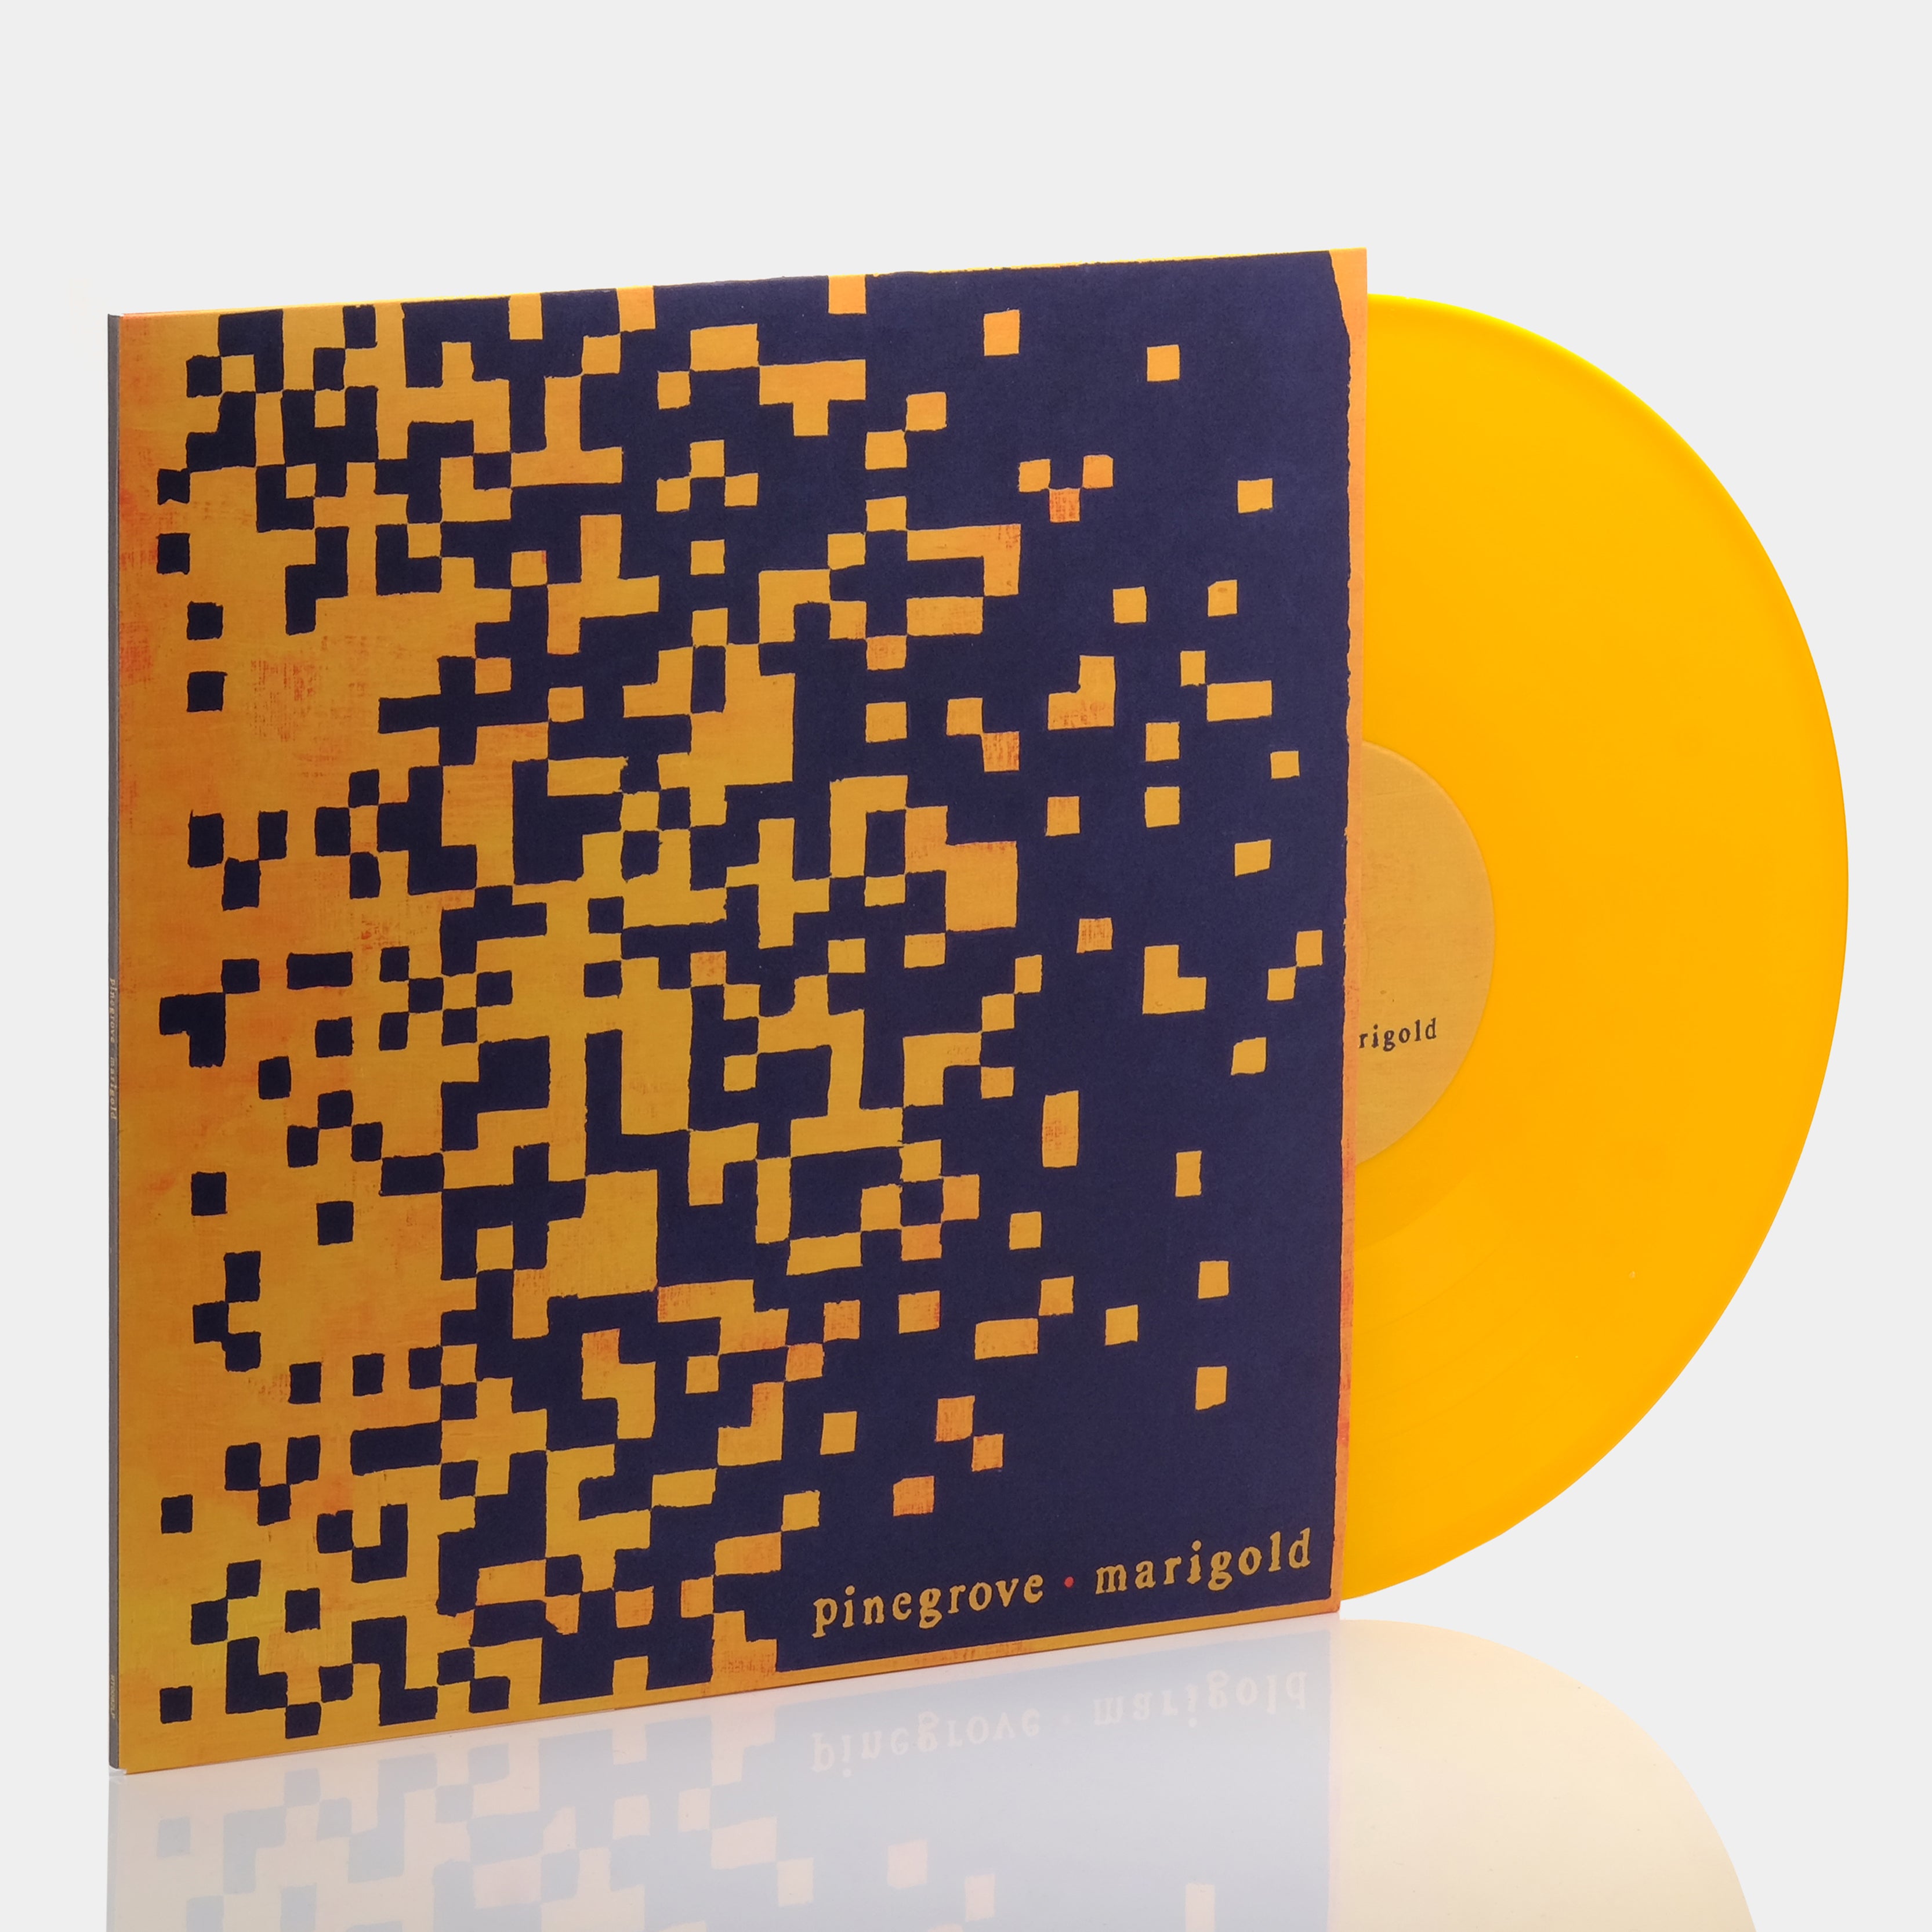 Pinegrove - Marigold LP Limited Edition Yellow Vinyl Record